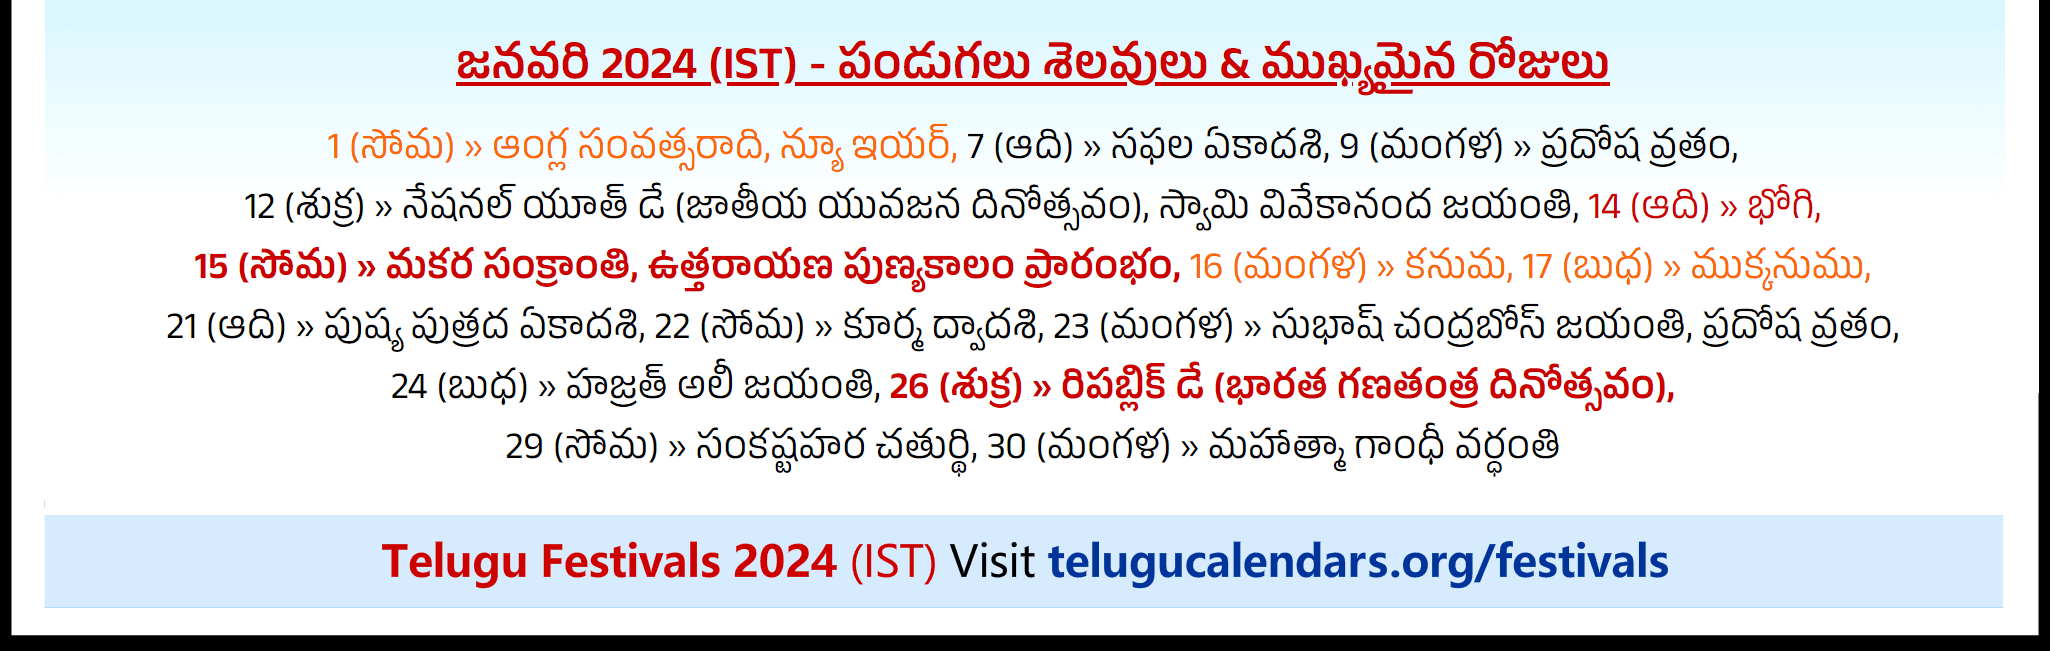 Telugu Festivals 2024 January New York